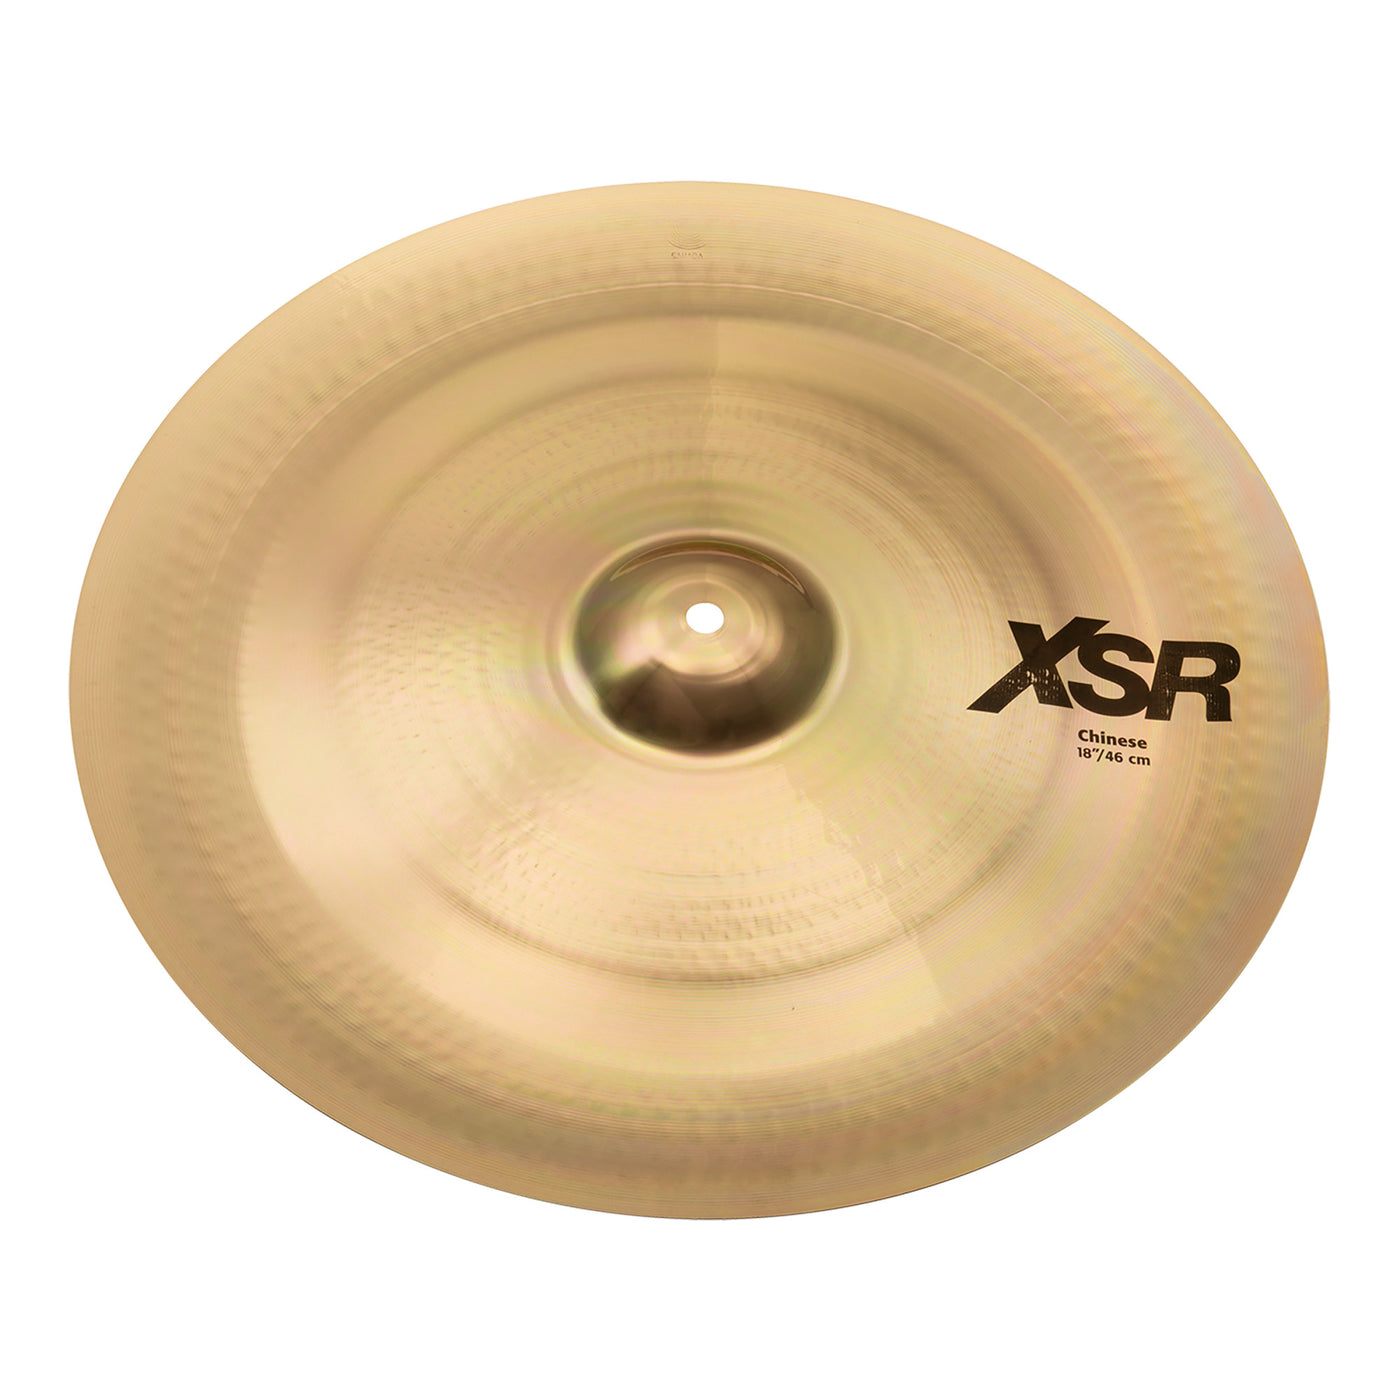 Sabian 18" XSR Chinese Cymbal - Brilliant Finish